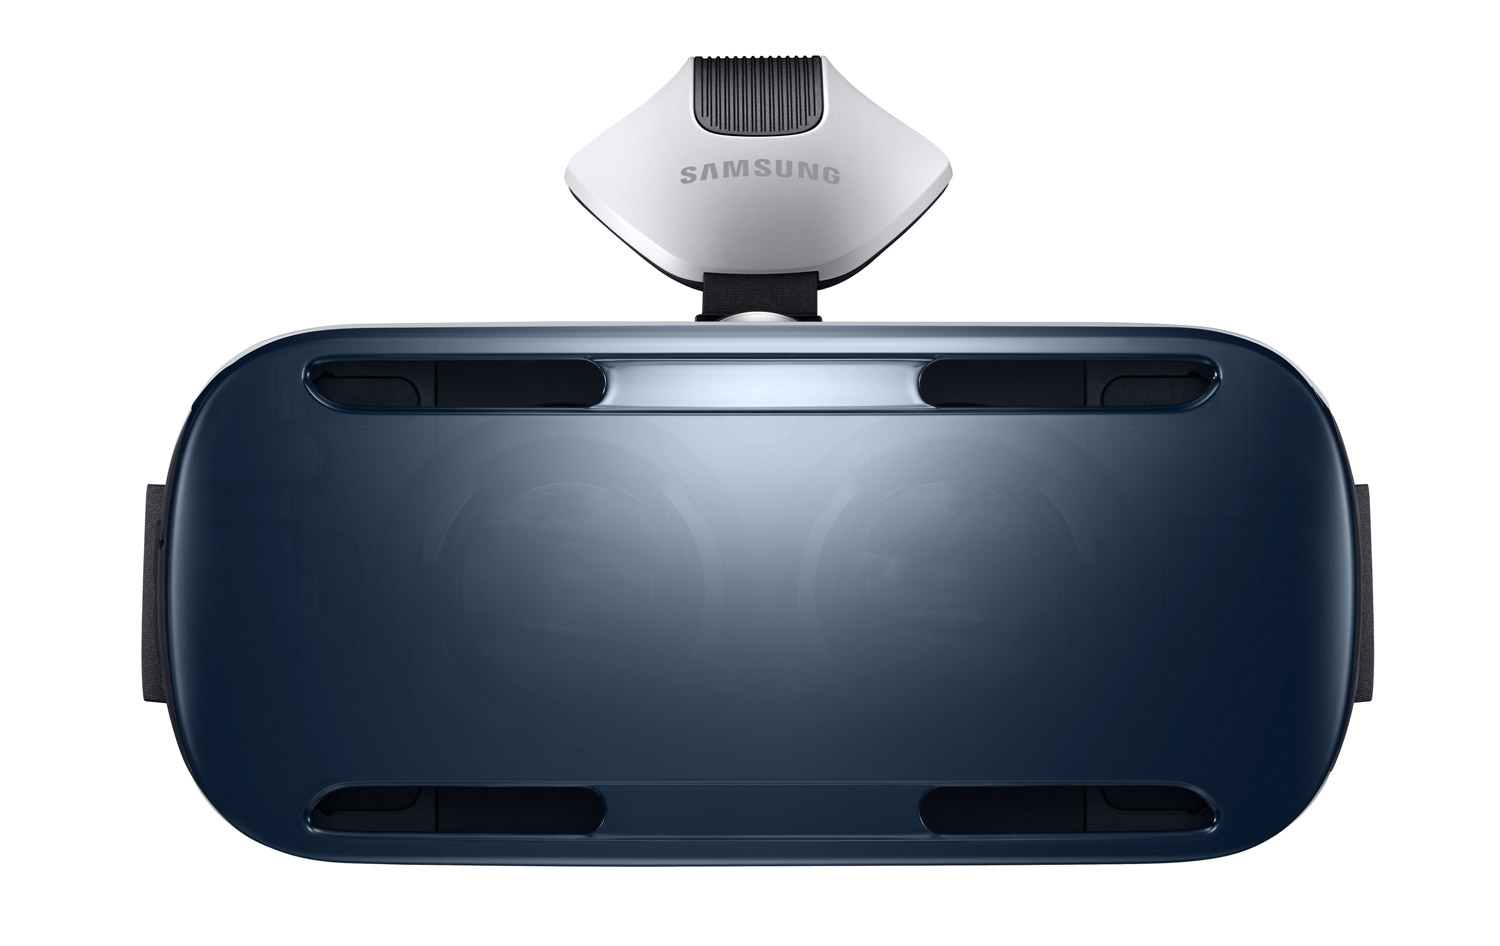 How To Watch Netflix On Samsung Gear VR